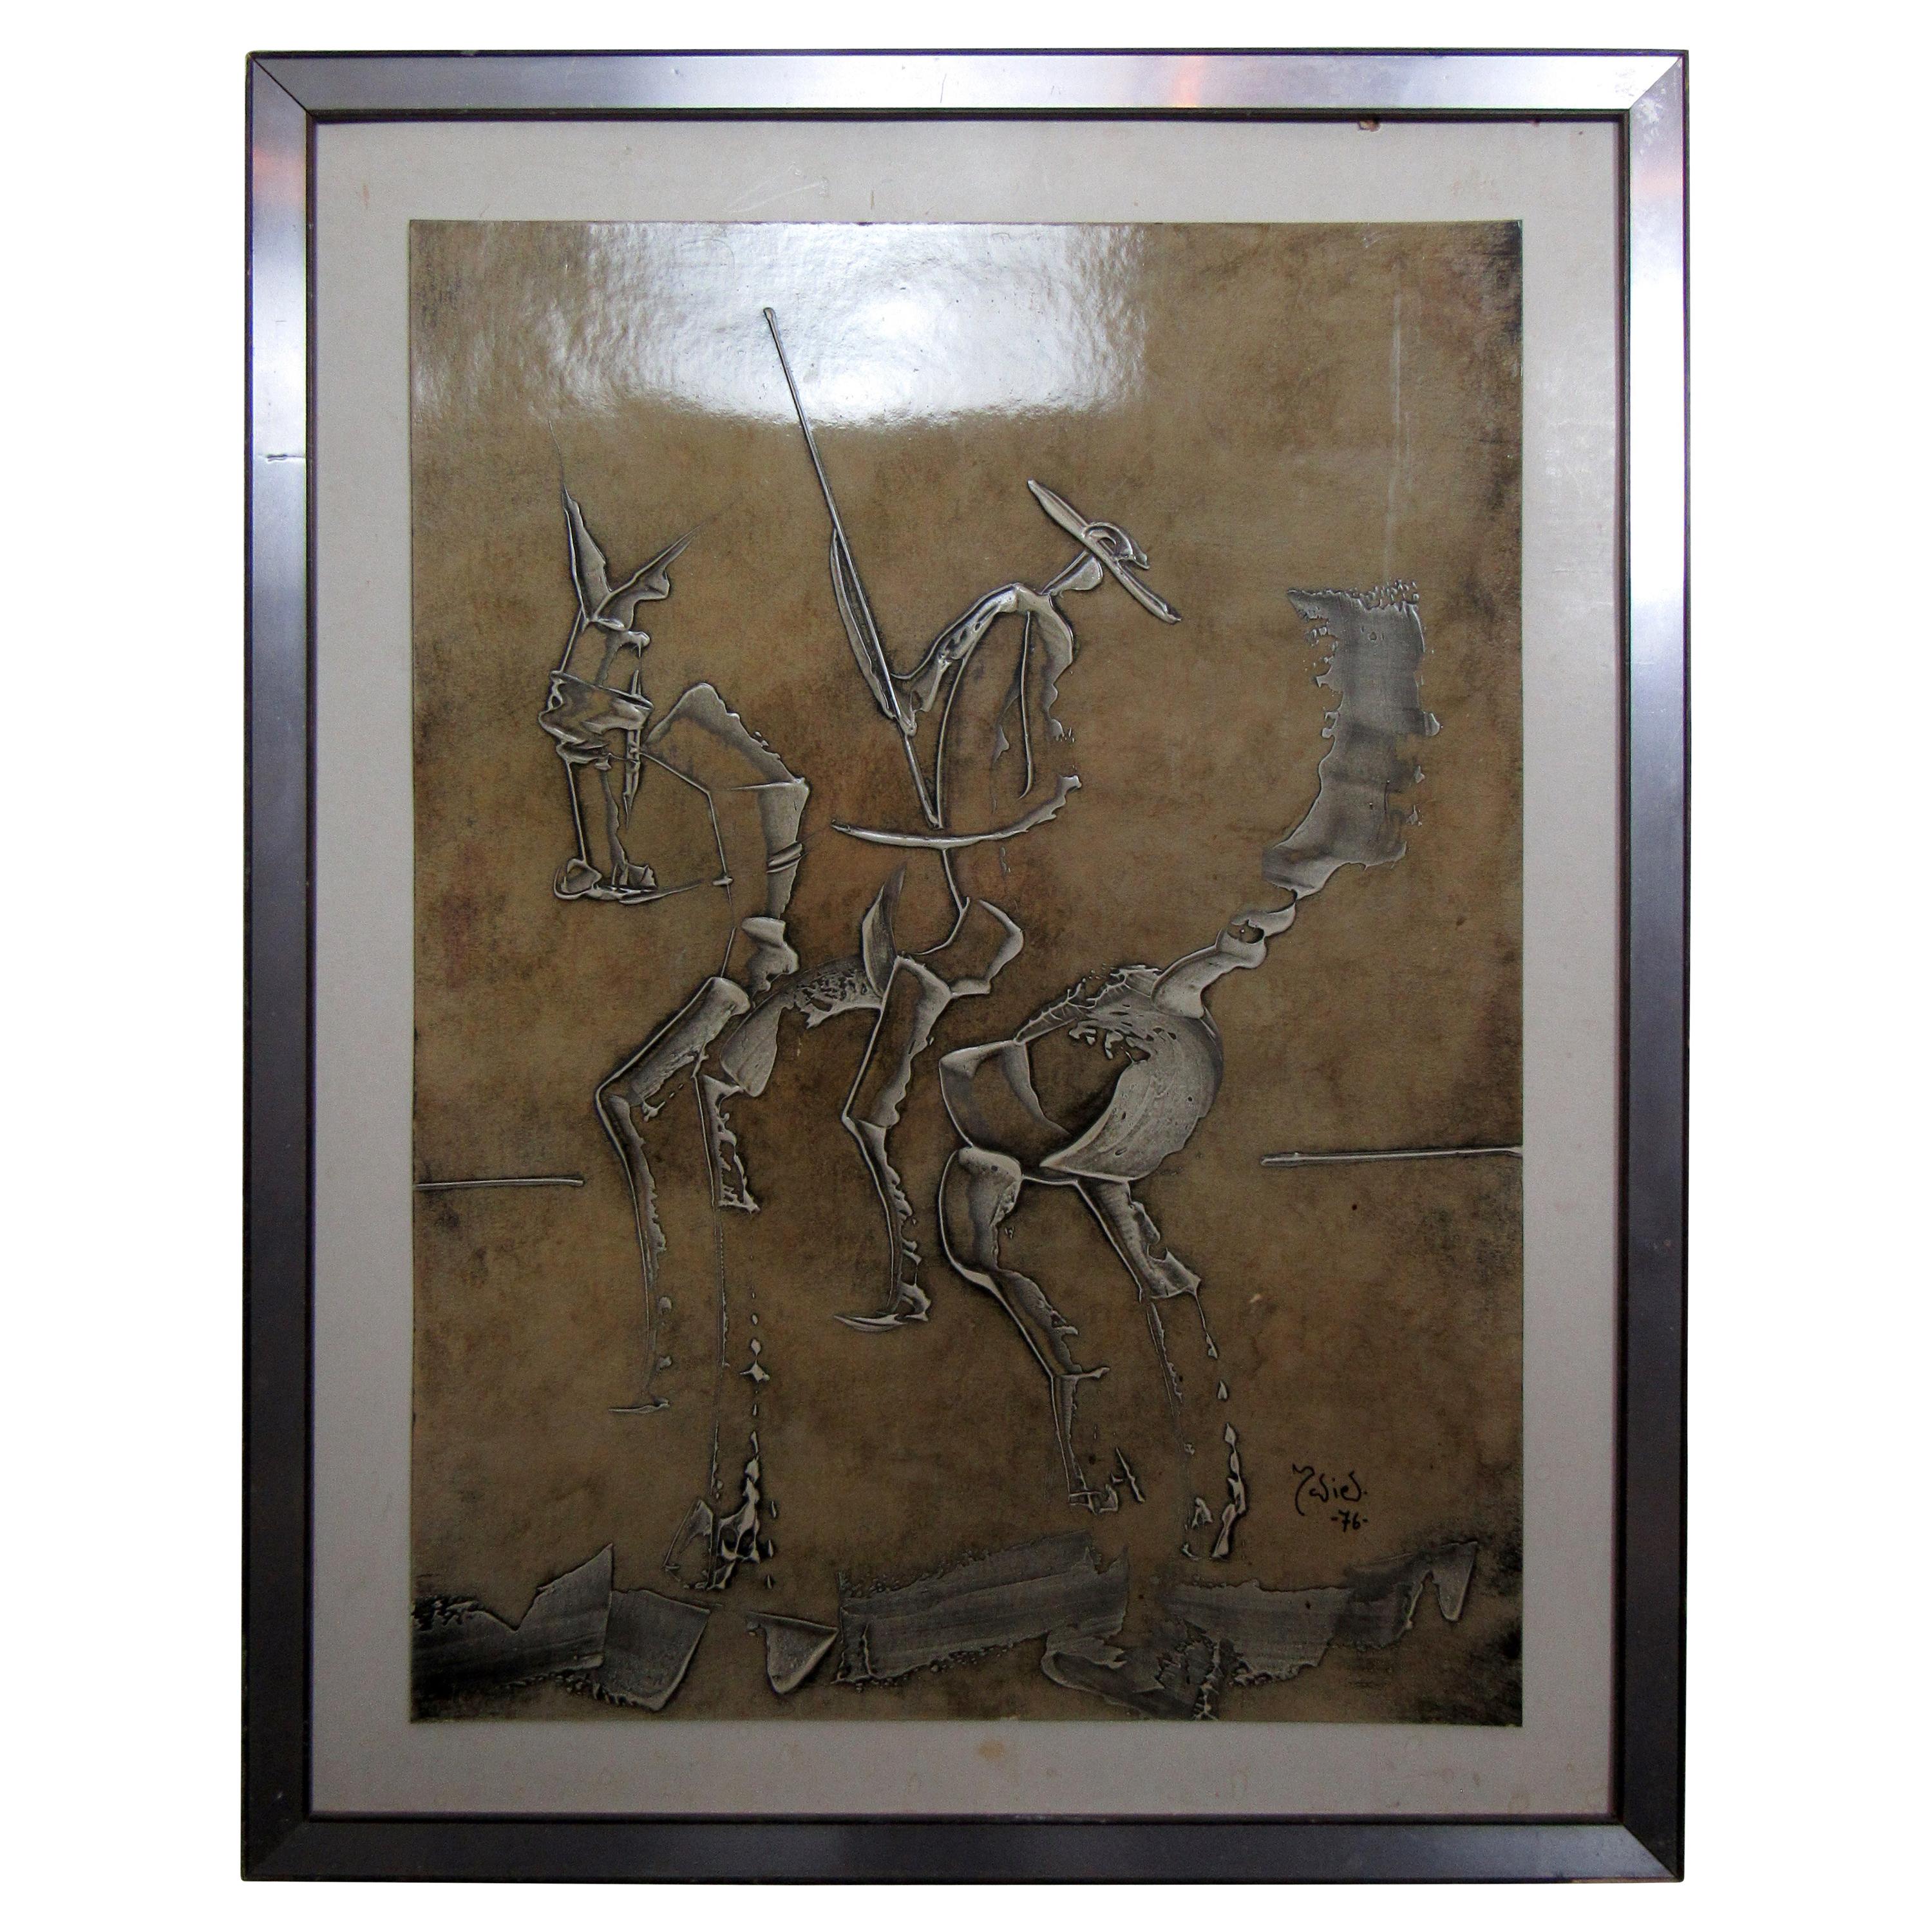 Framed Print of Don Quixote Artwork